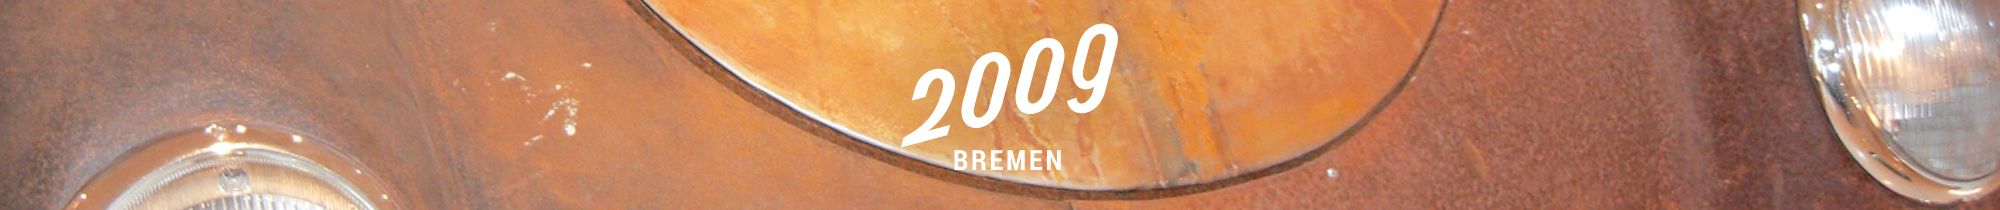 2009-bremen-slidi-01